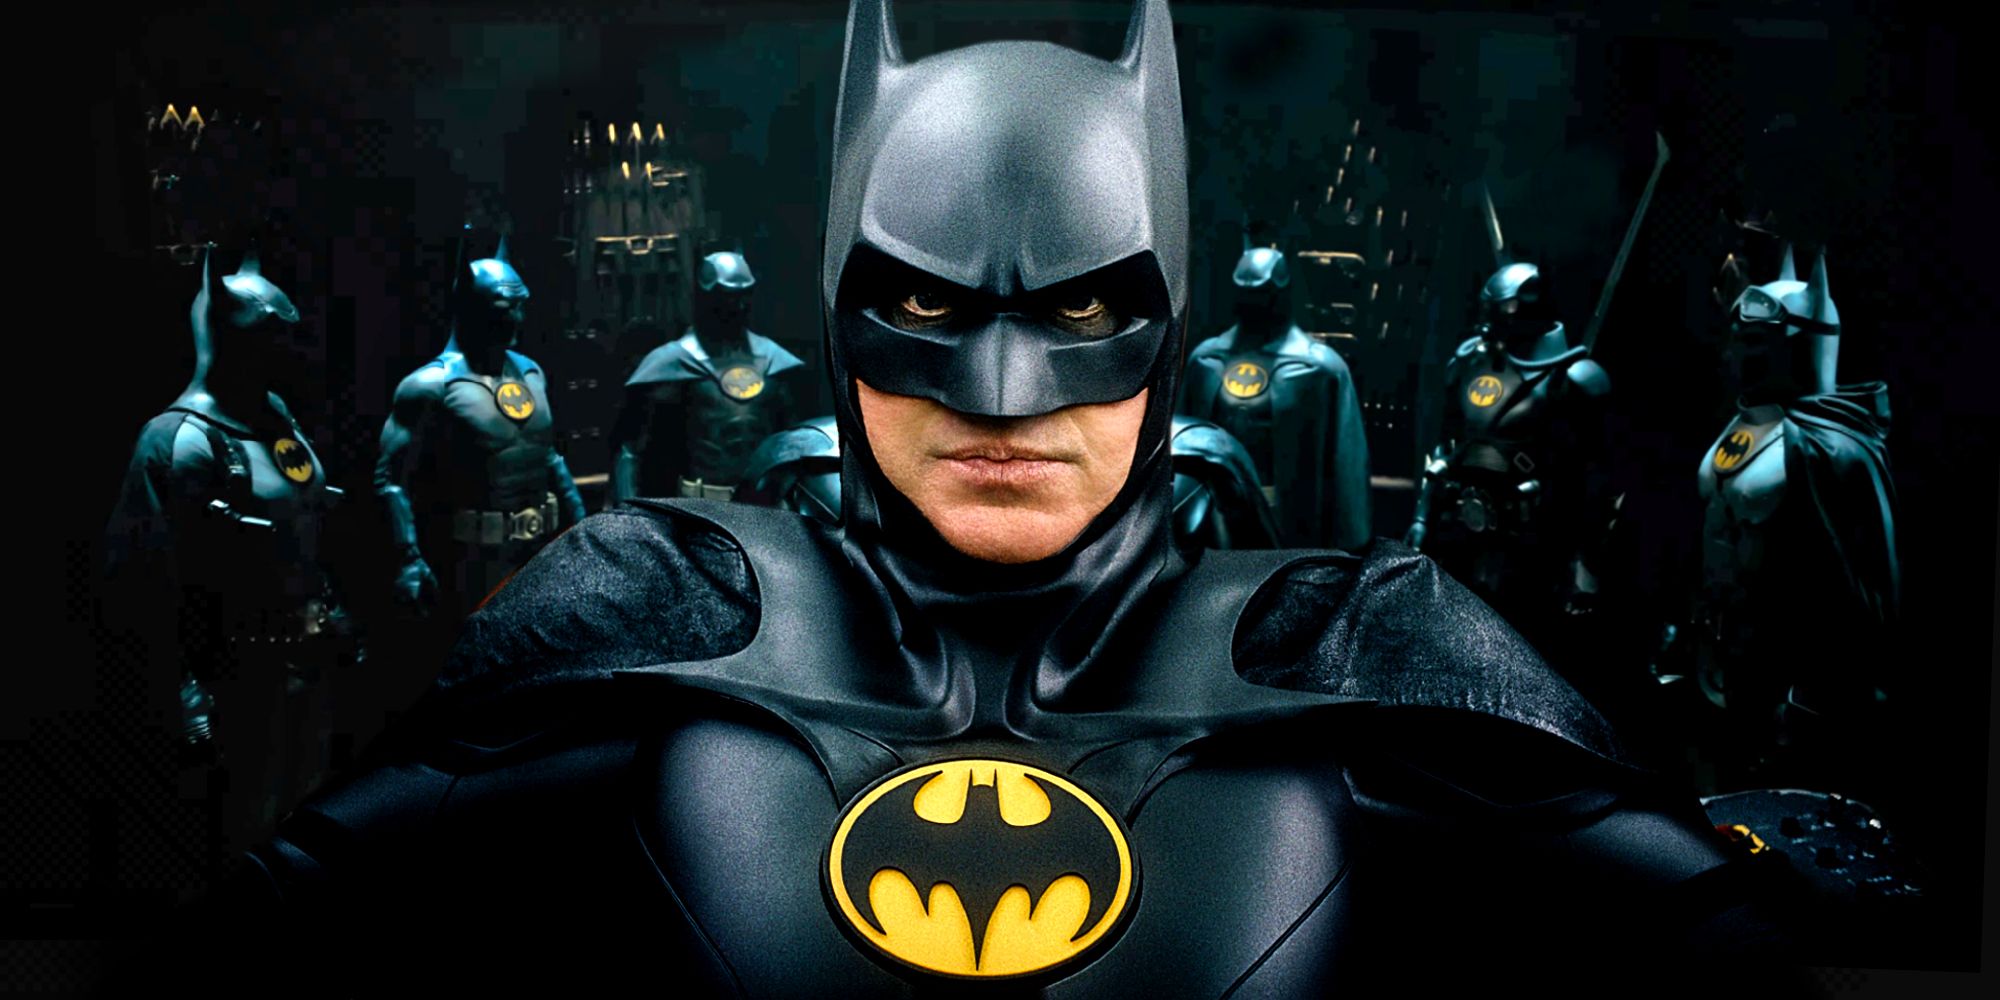 Michael Keaton's Batman Suits In The Flash